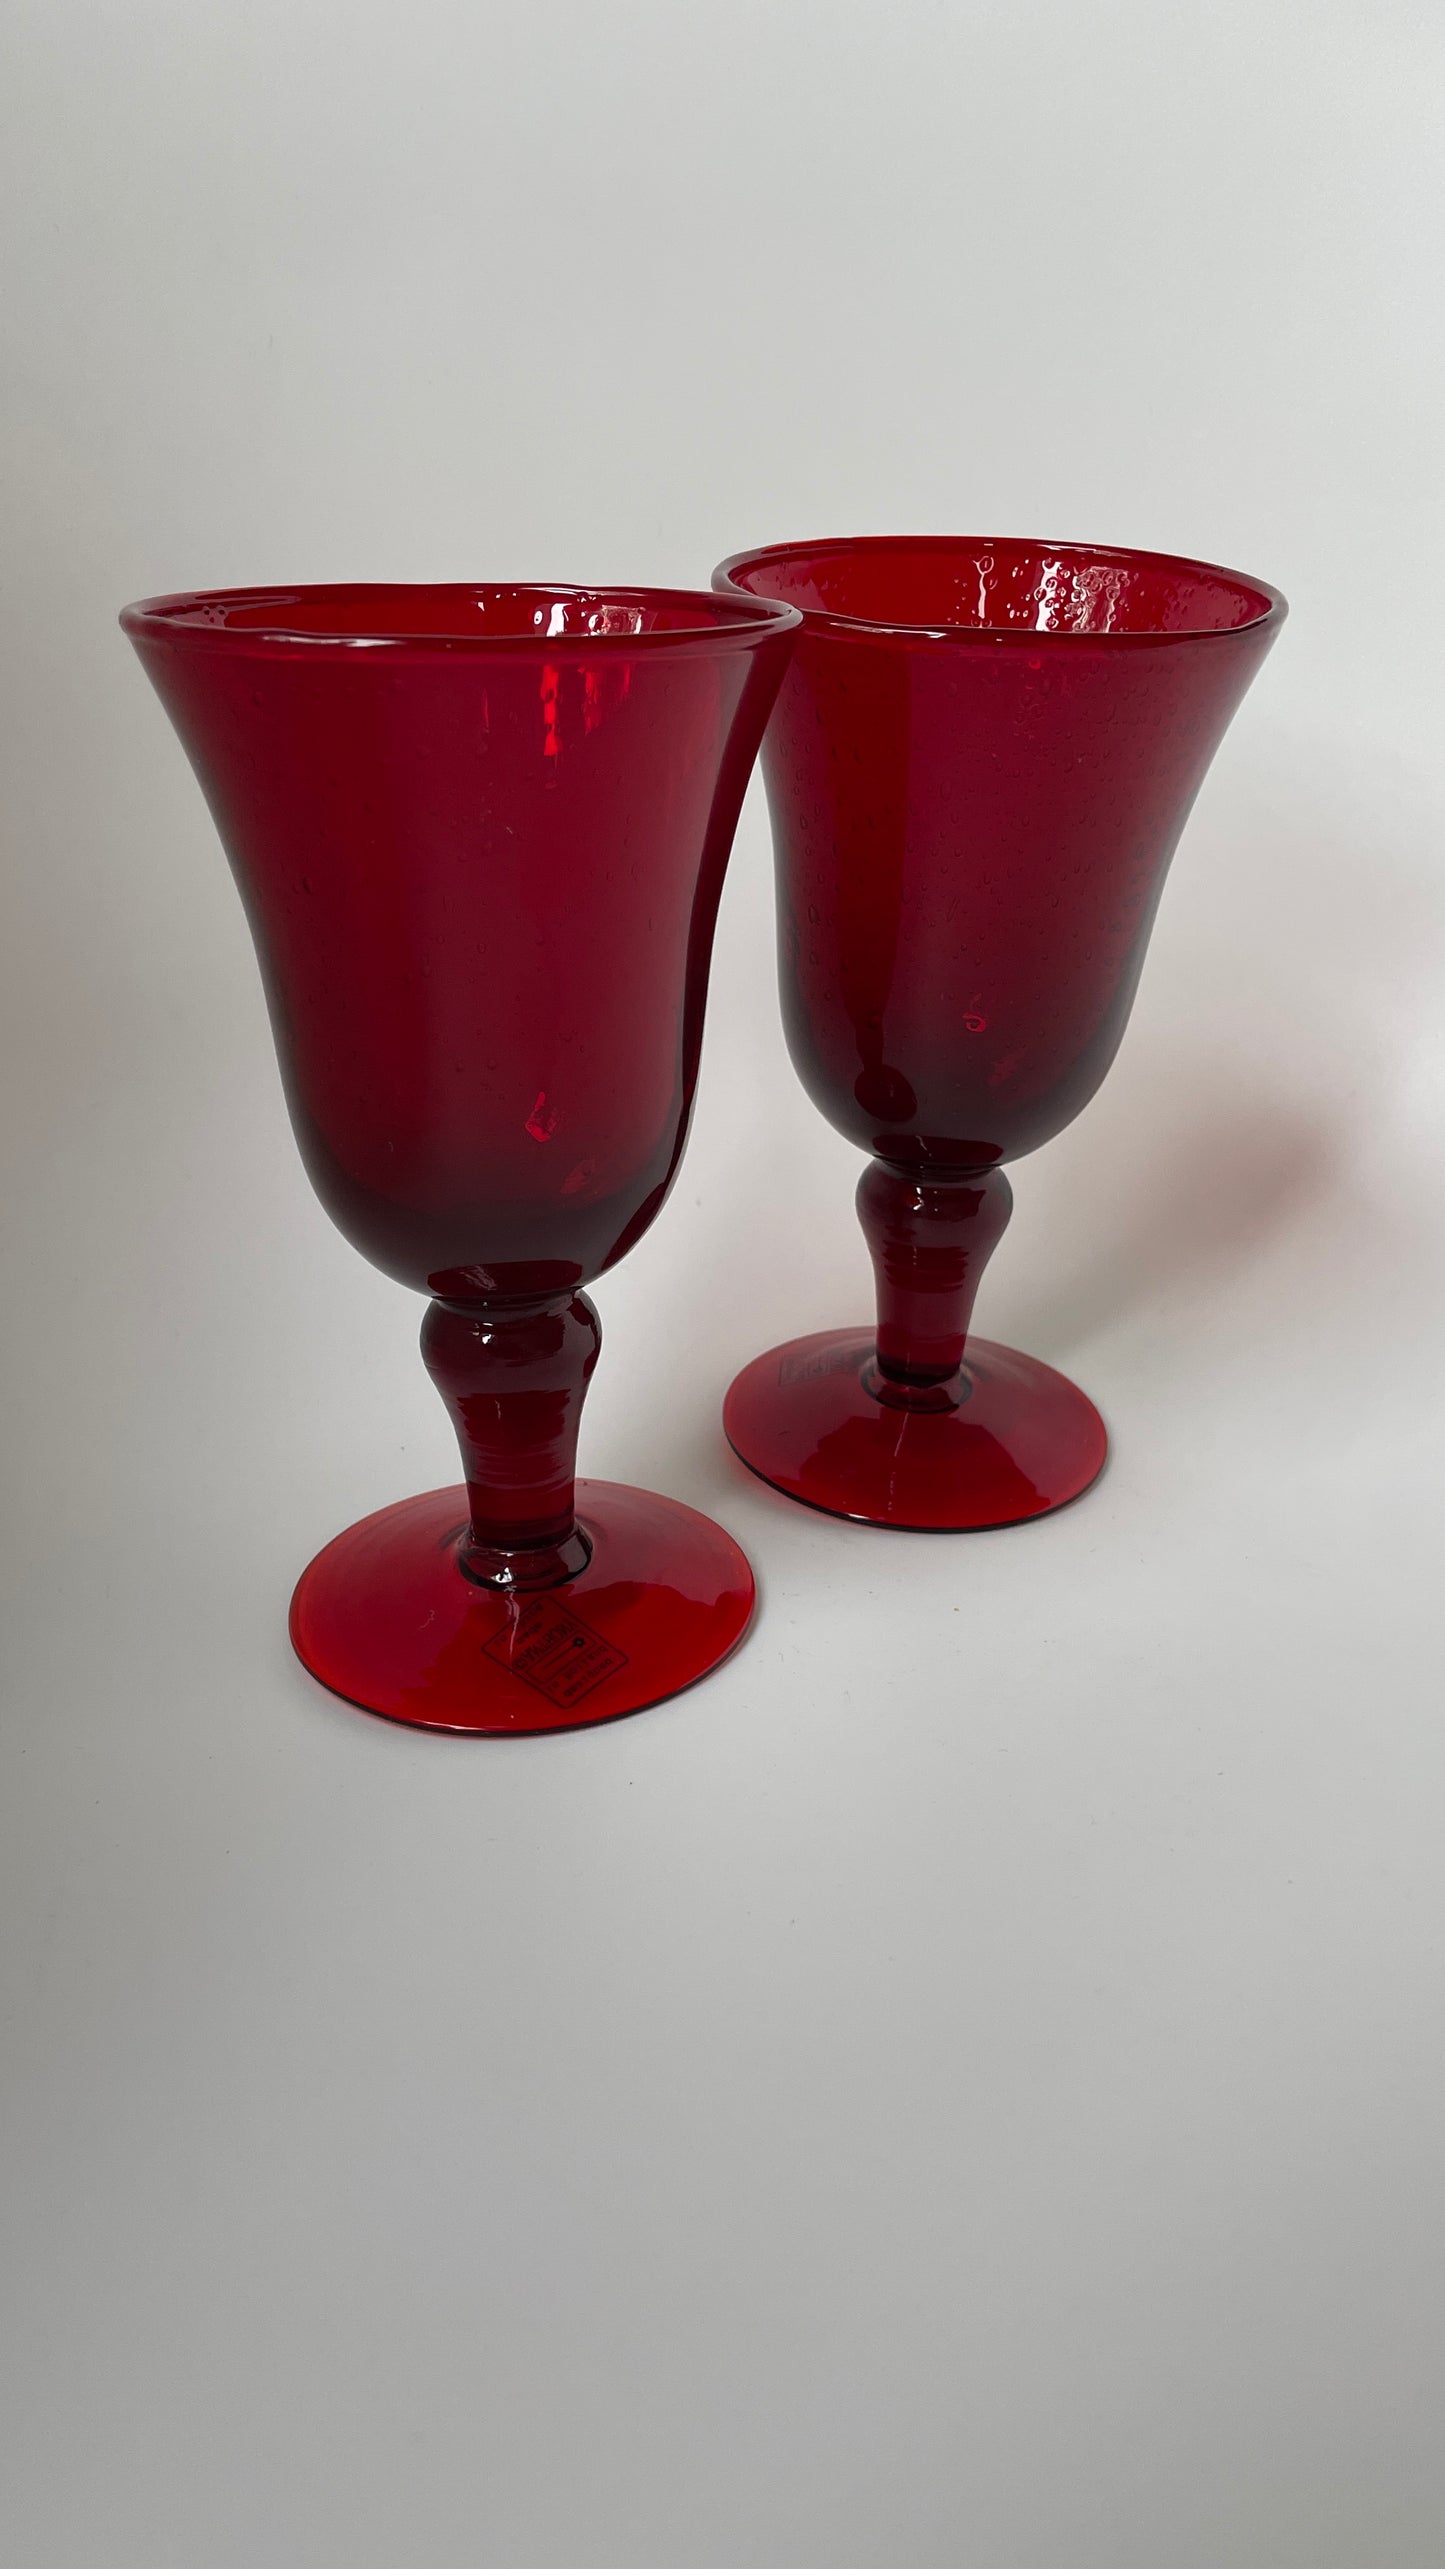 Red goblets